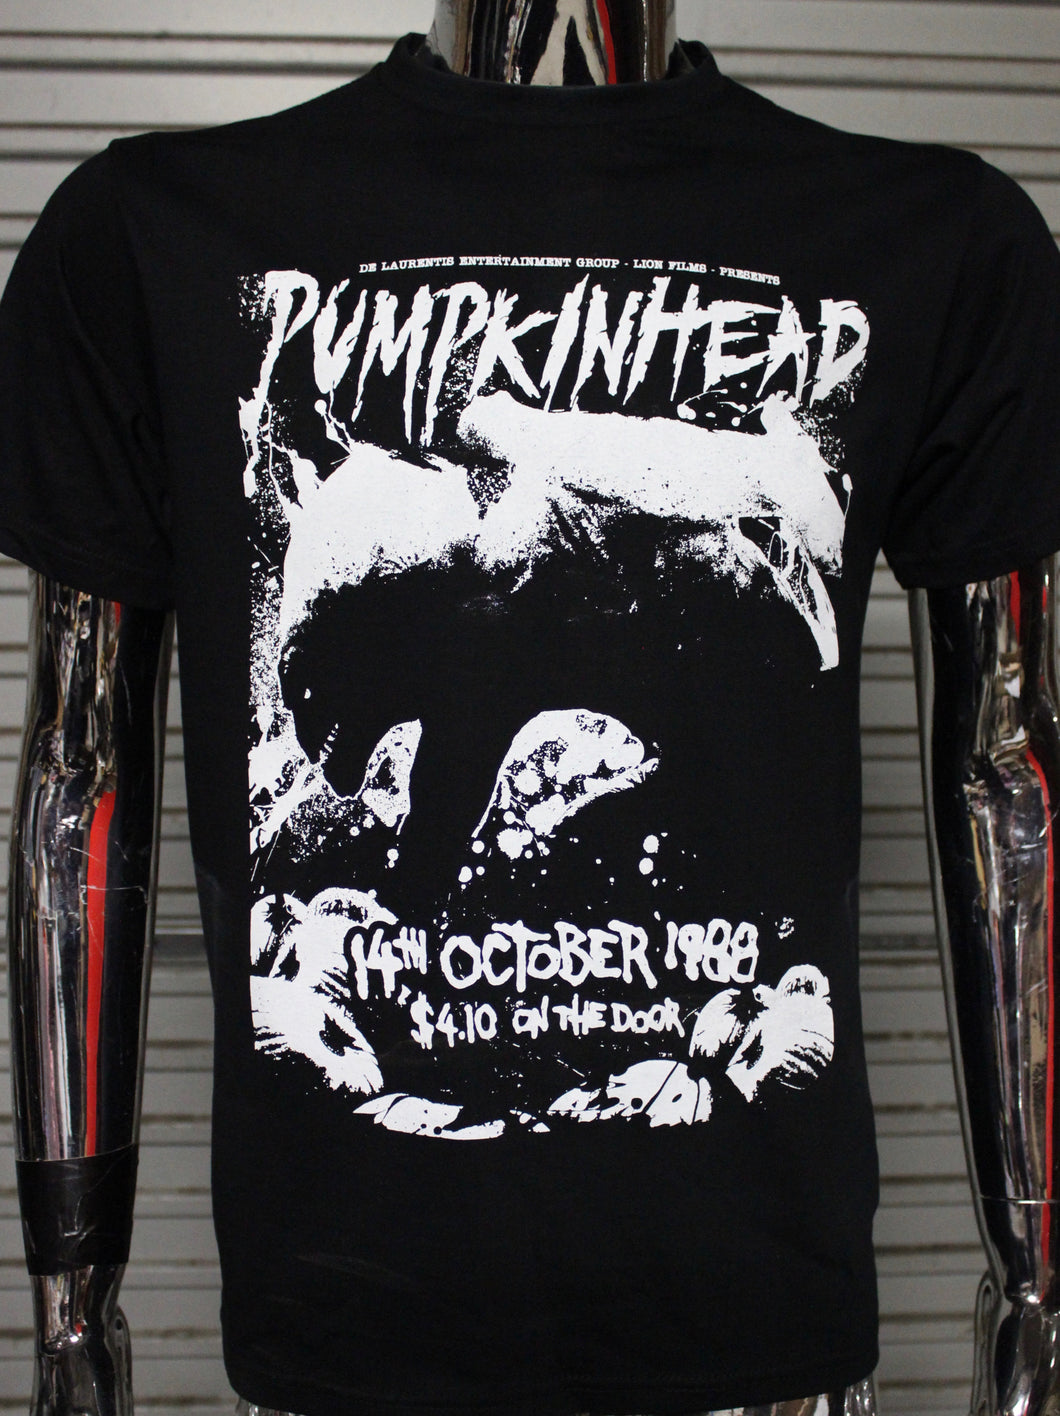 Pumpkinhead DIY punk flyer T-shirt